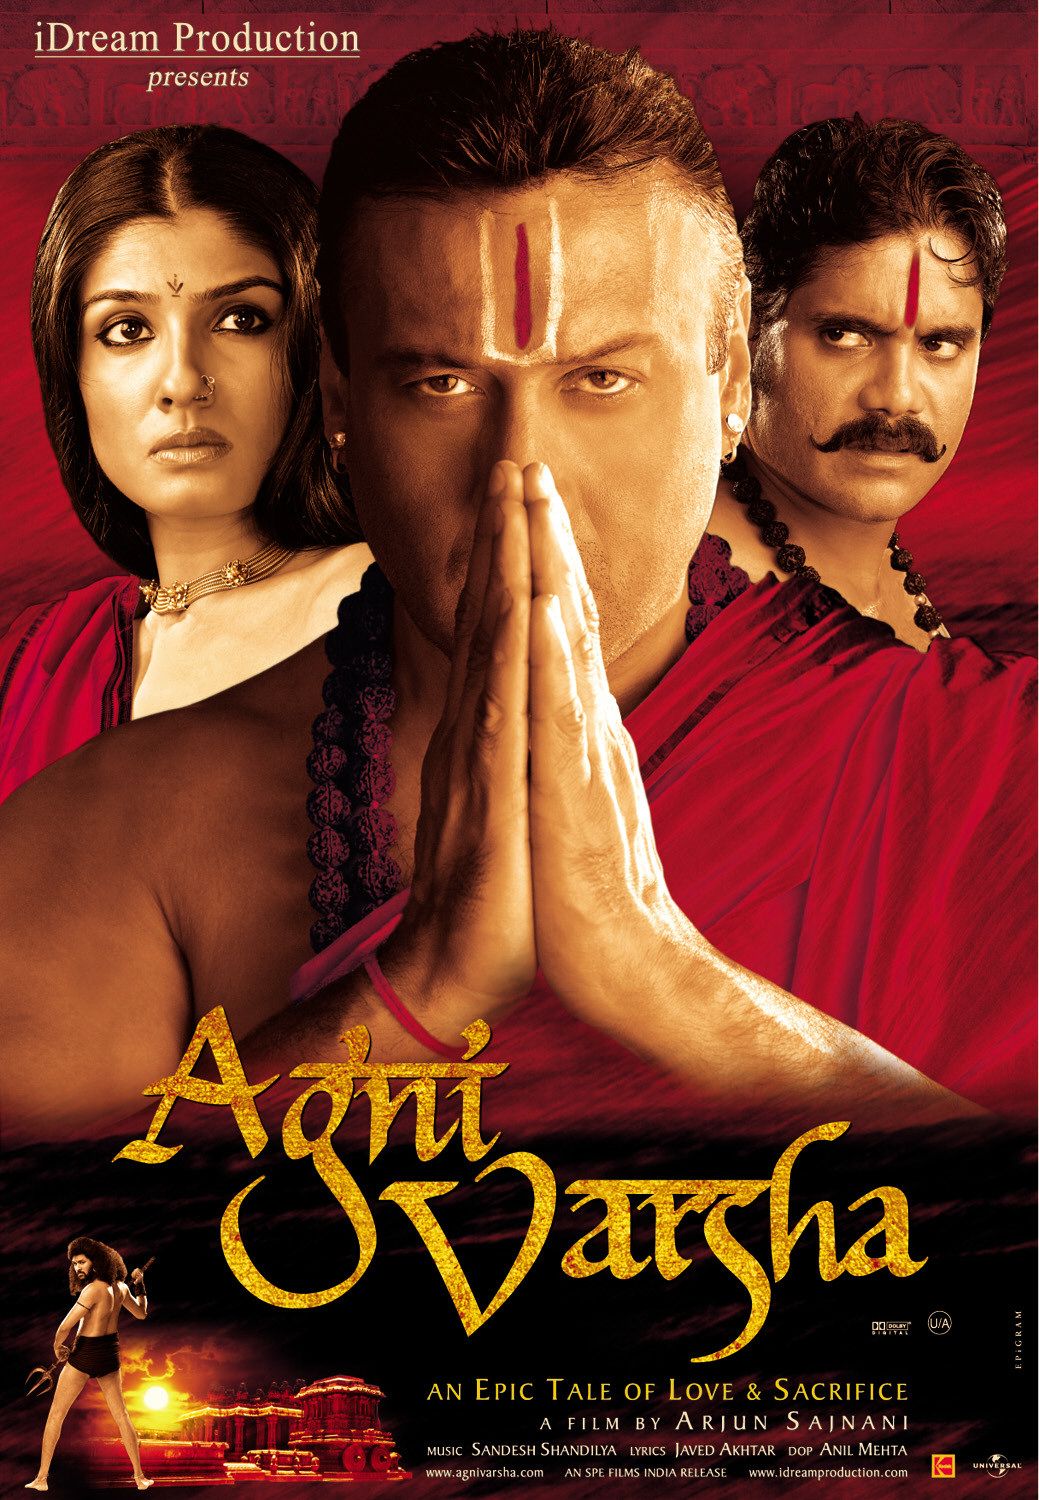 Extra Large Movie Poster Image for Agni Varsha (#1 of 4)